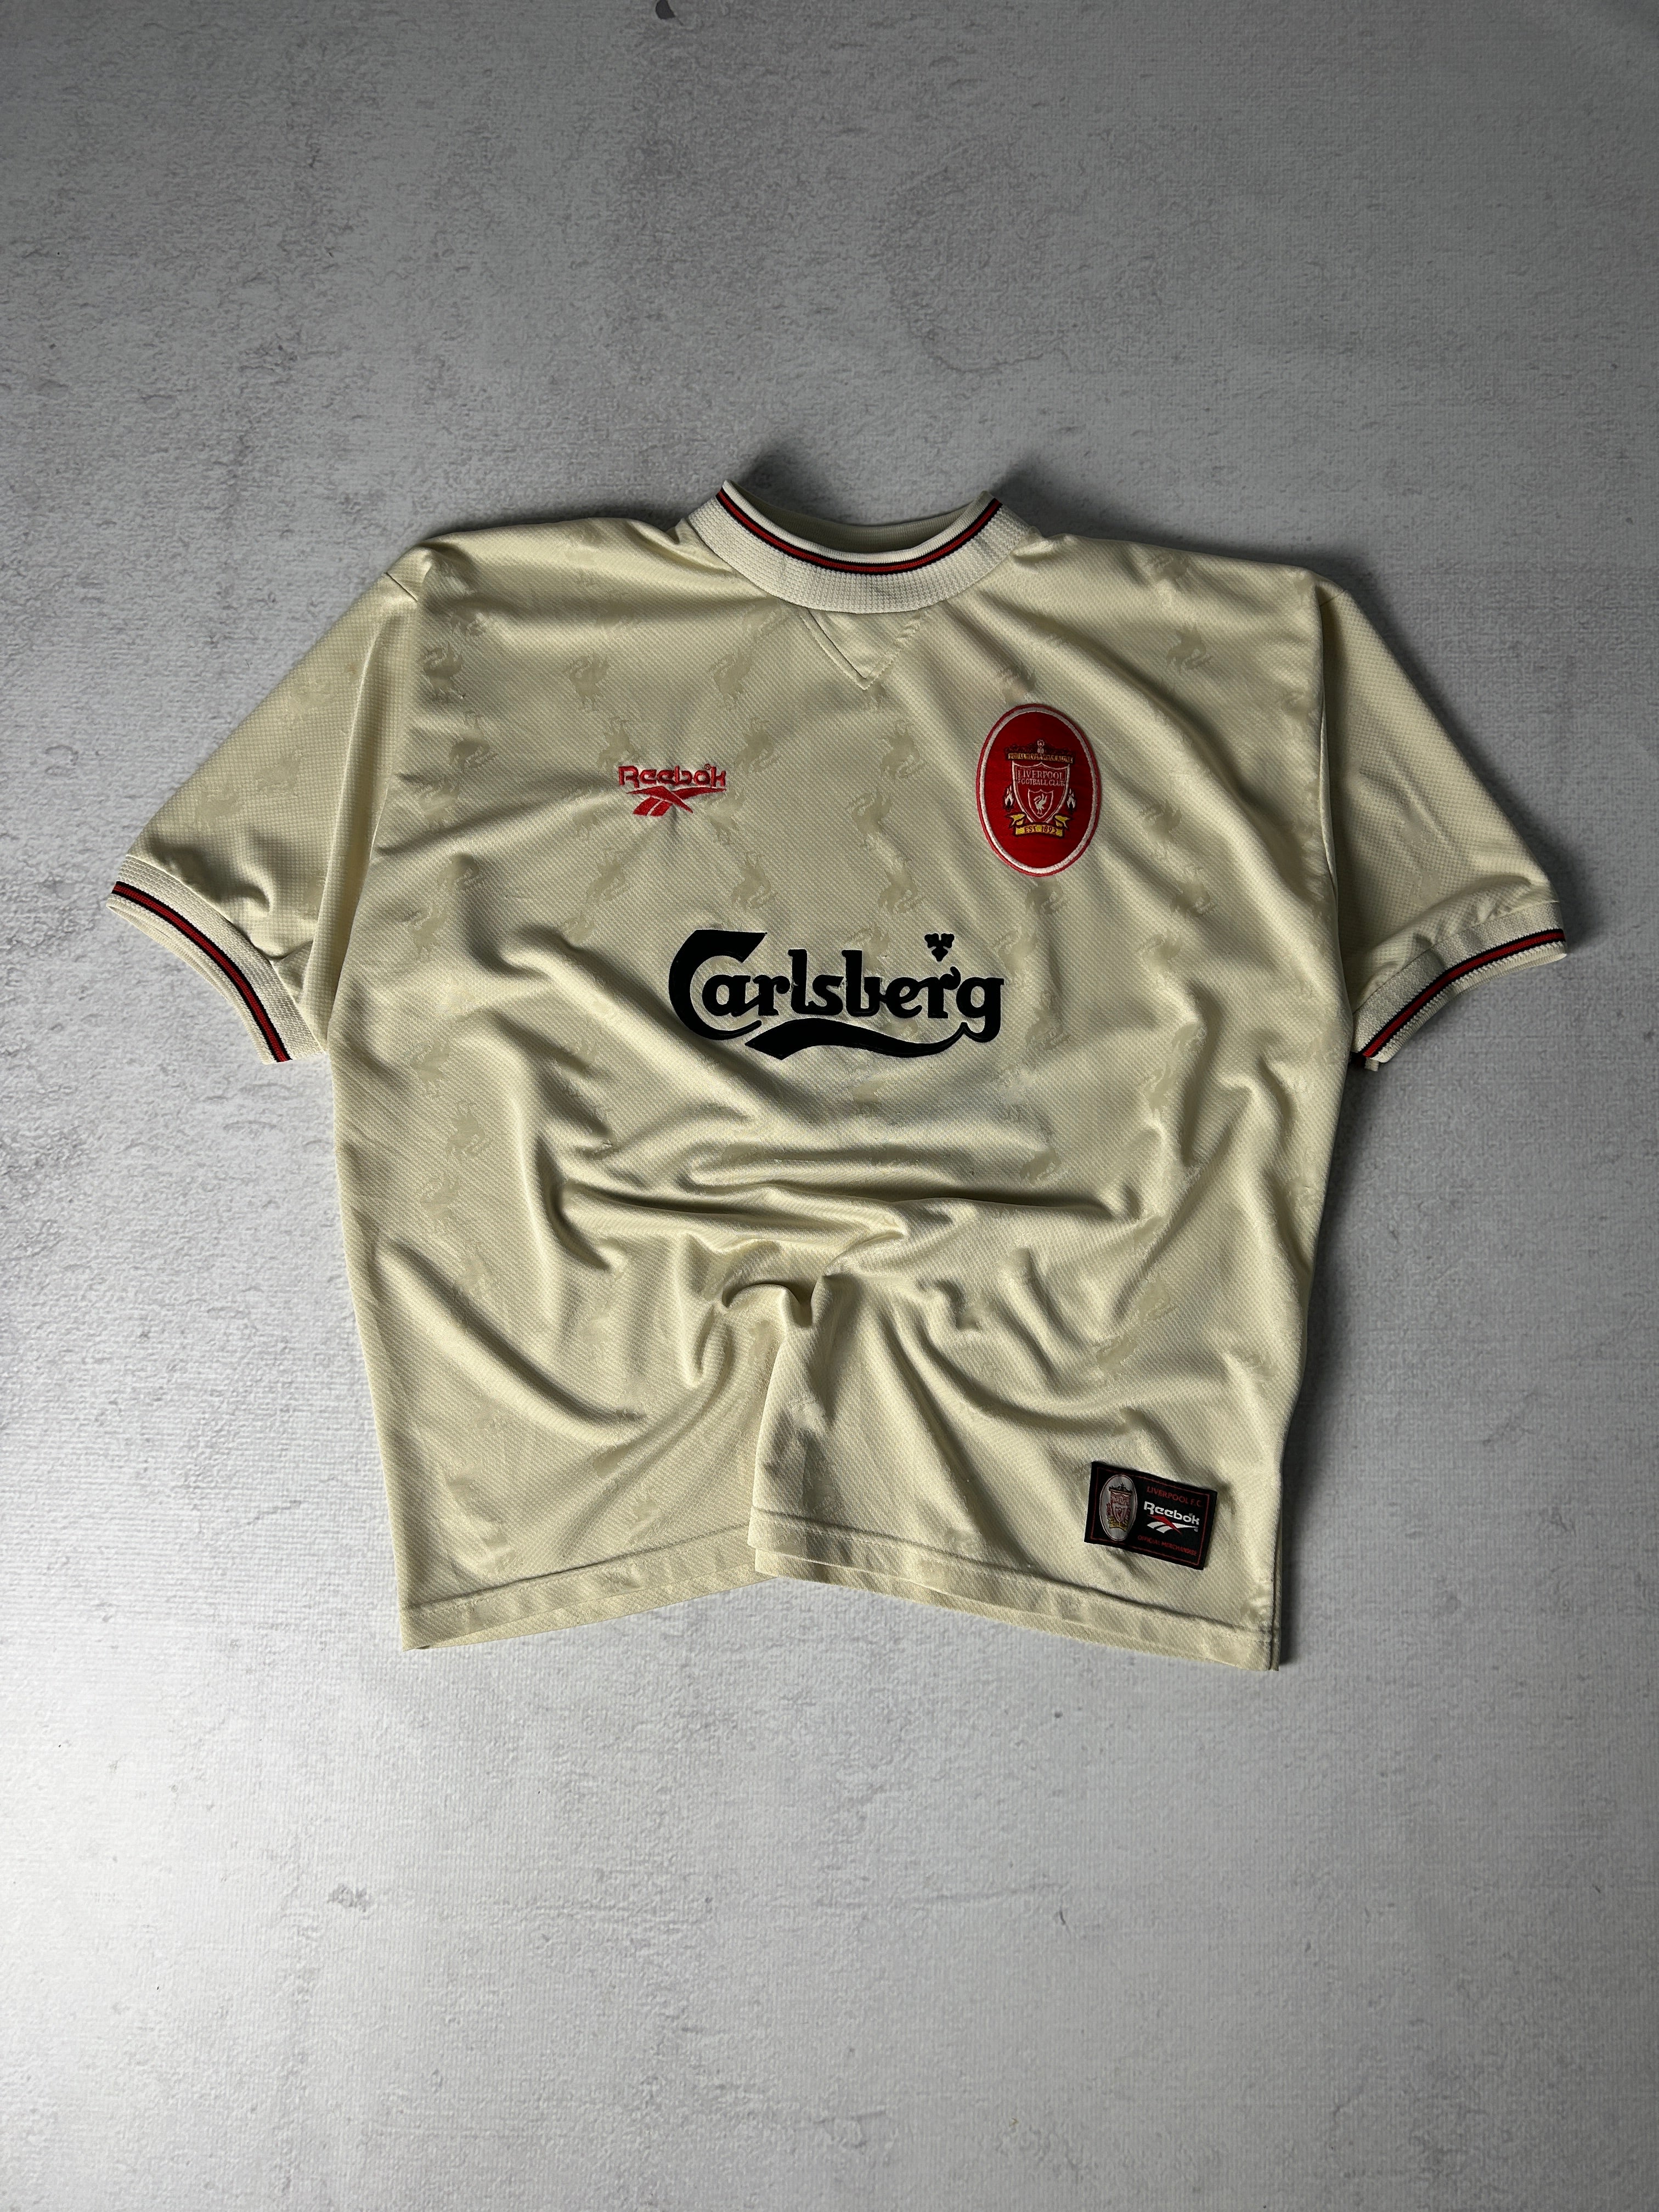 Vintage Liverpool Reebok Carlsberg Kit - Men's XL